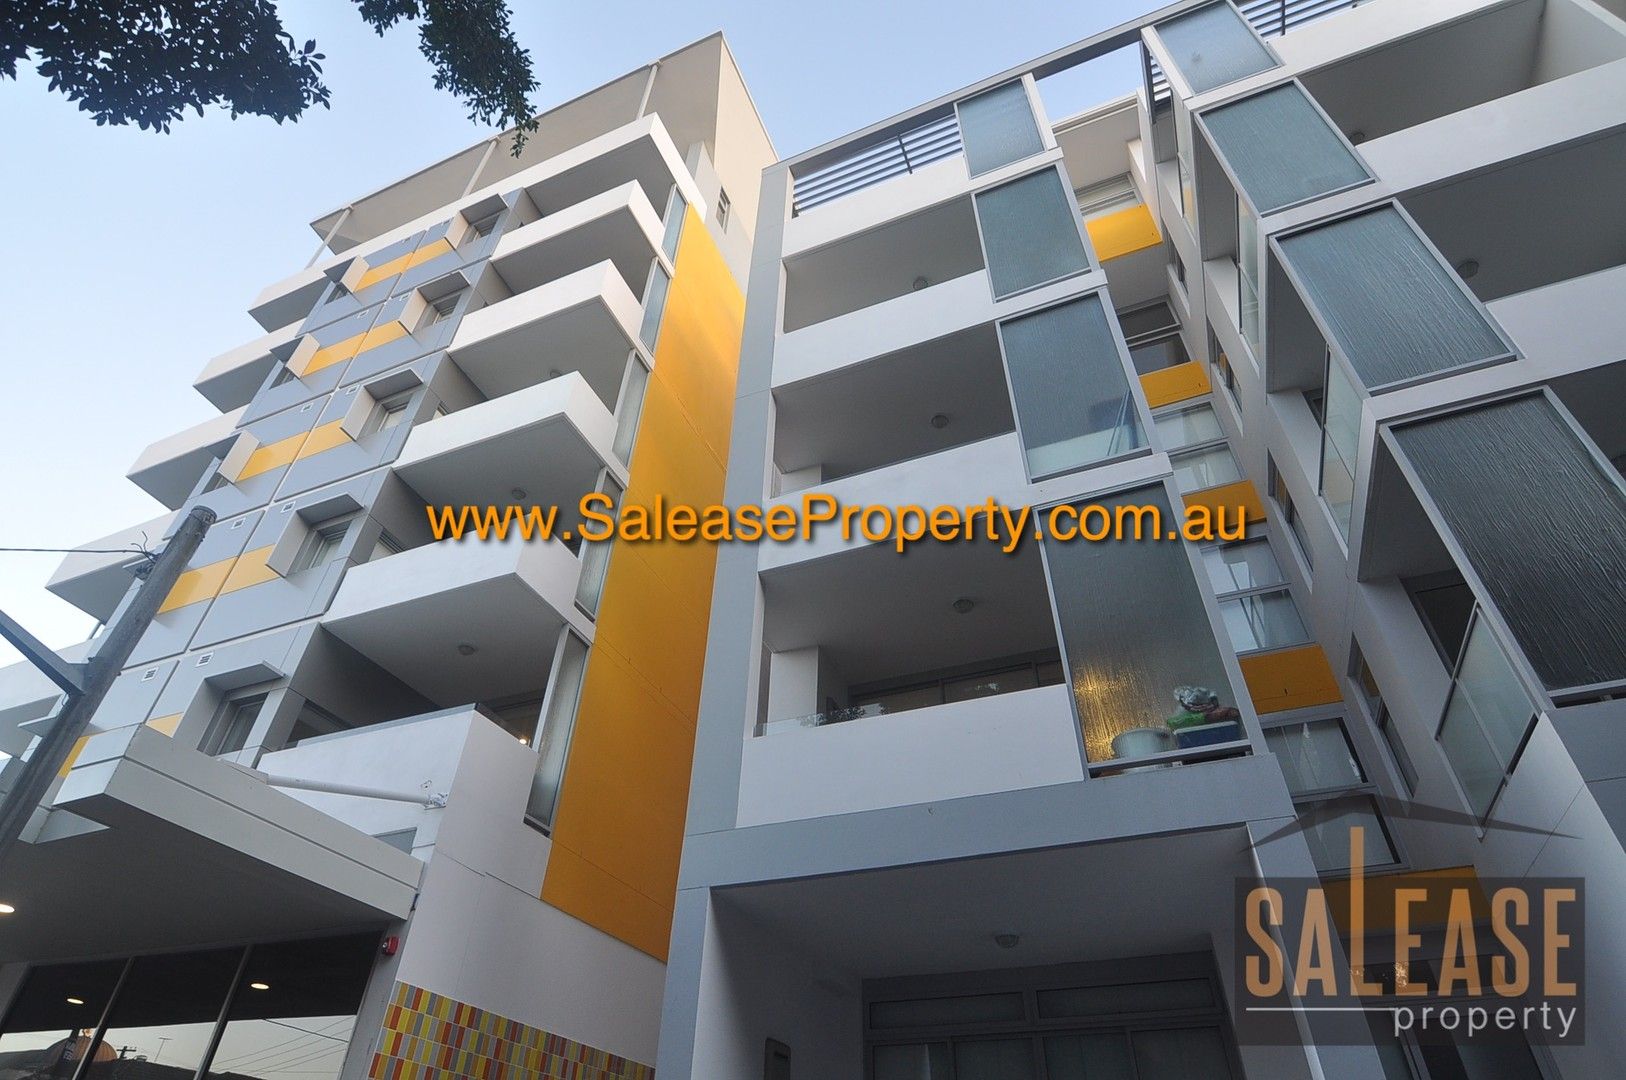 2 bedrooms Apartment / Unit / Flat in 22/2A Duke St KENSINGTON NSW, 2033